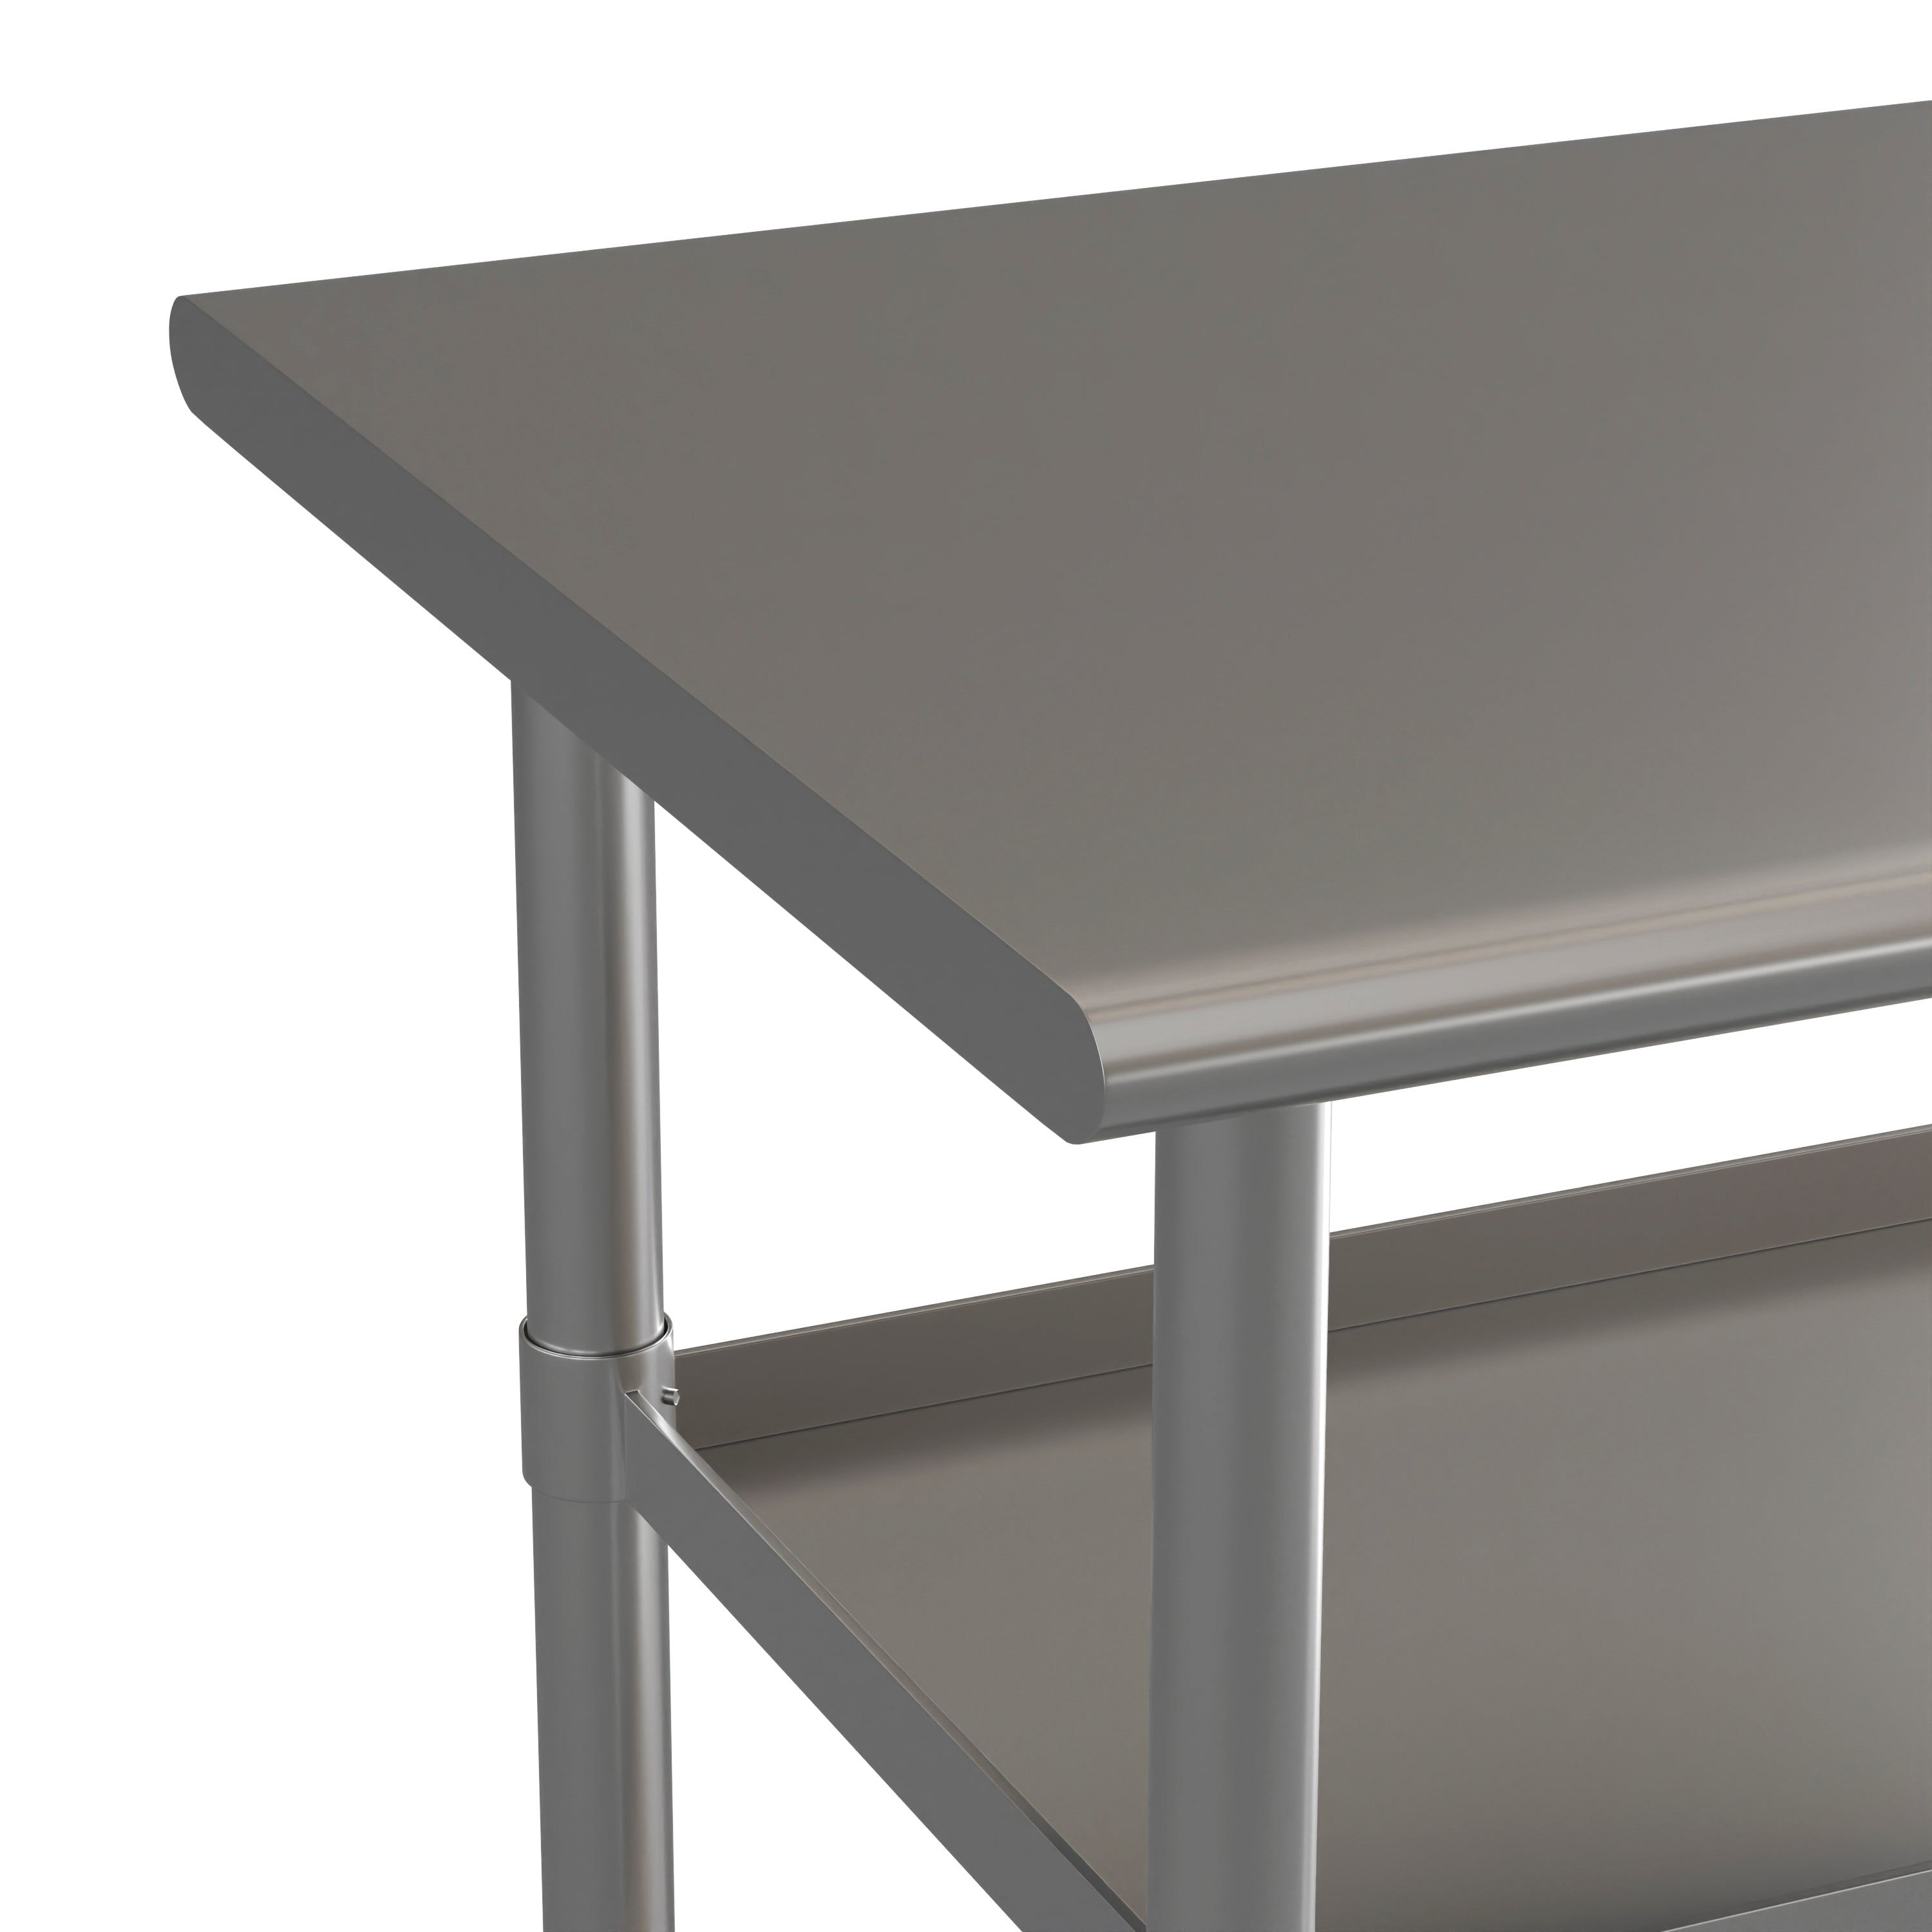 Stainless Steel 18 Gauge Work Table with 2 Undershelves - NSF Certified-Stainless Steel WorkTable-Flash Furniture-Wall2Wall Furnishings